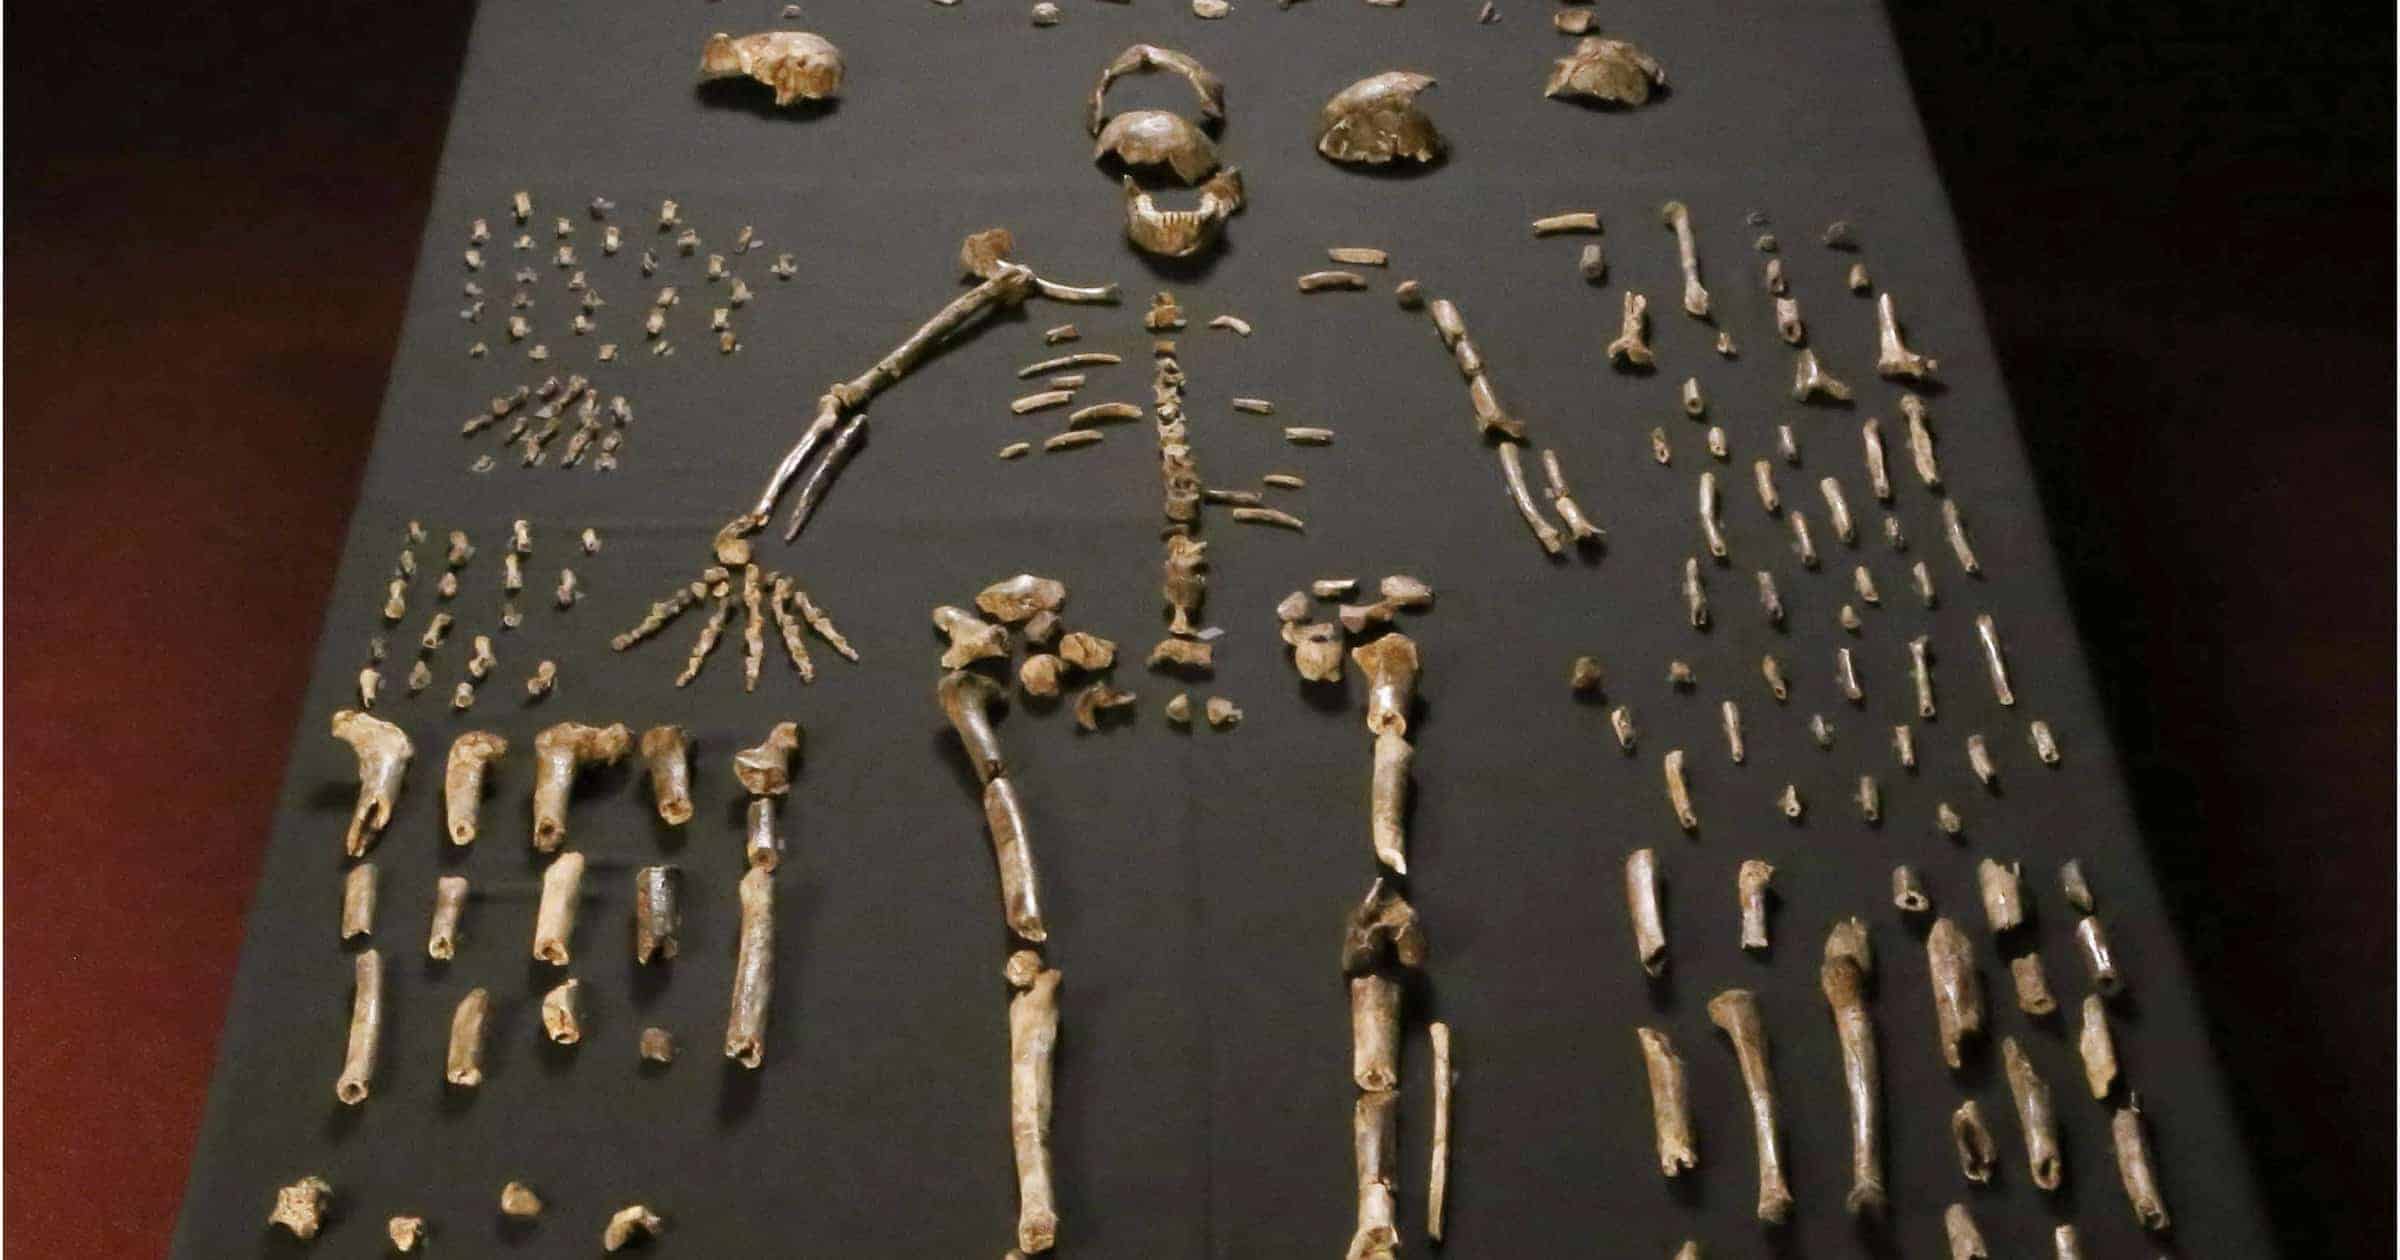 Homo naledi fossils